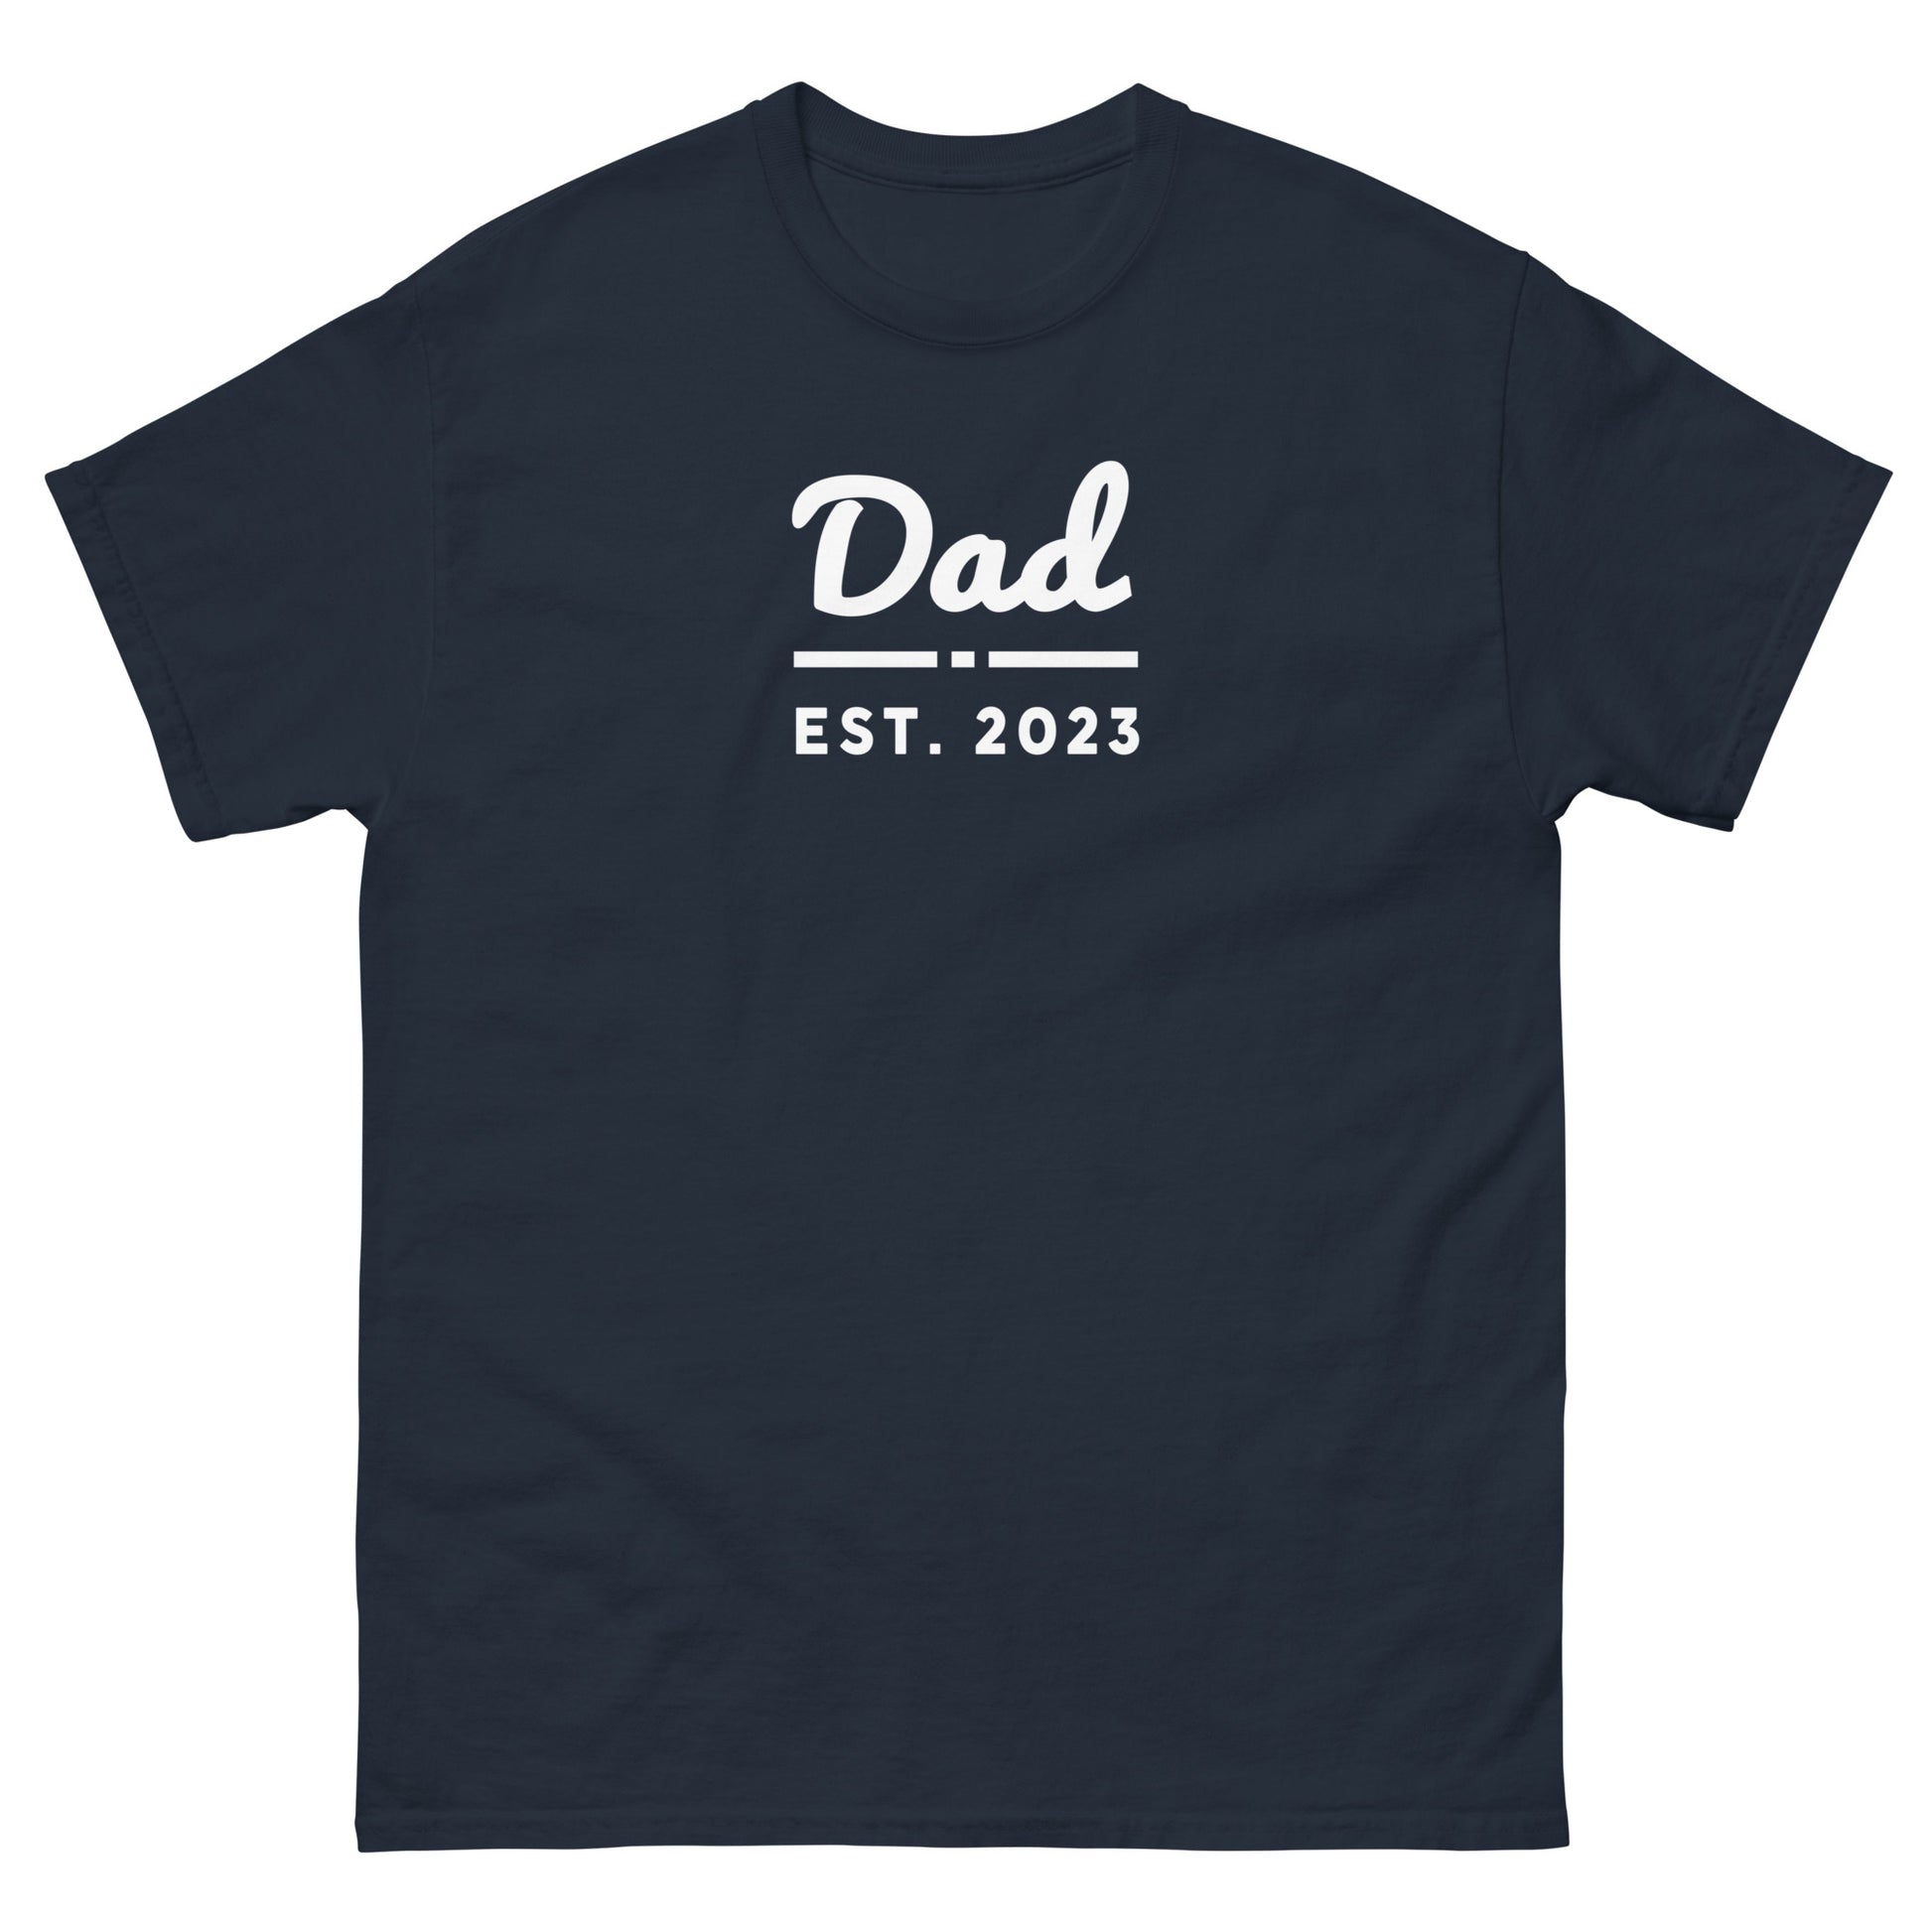 Dad Est. 2023 Shirt - That Is So Dad